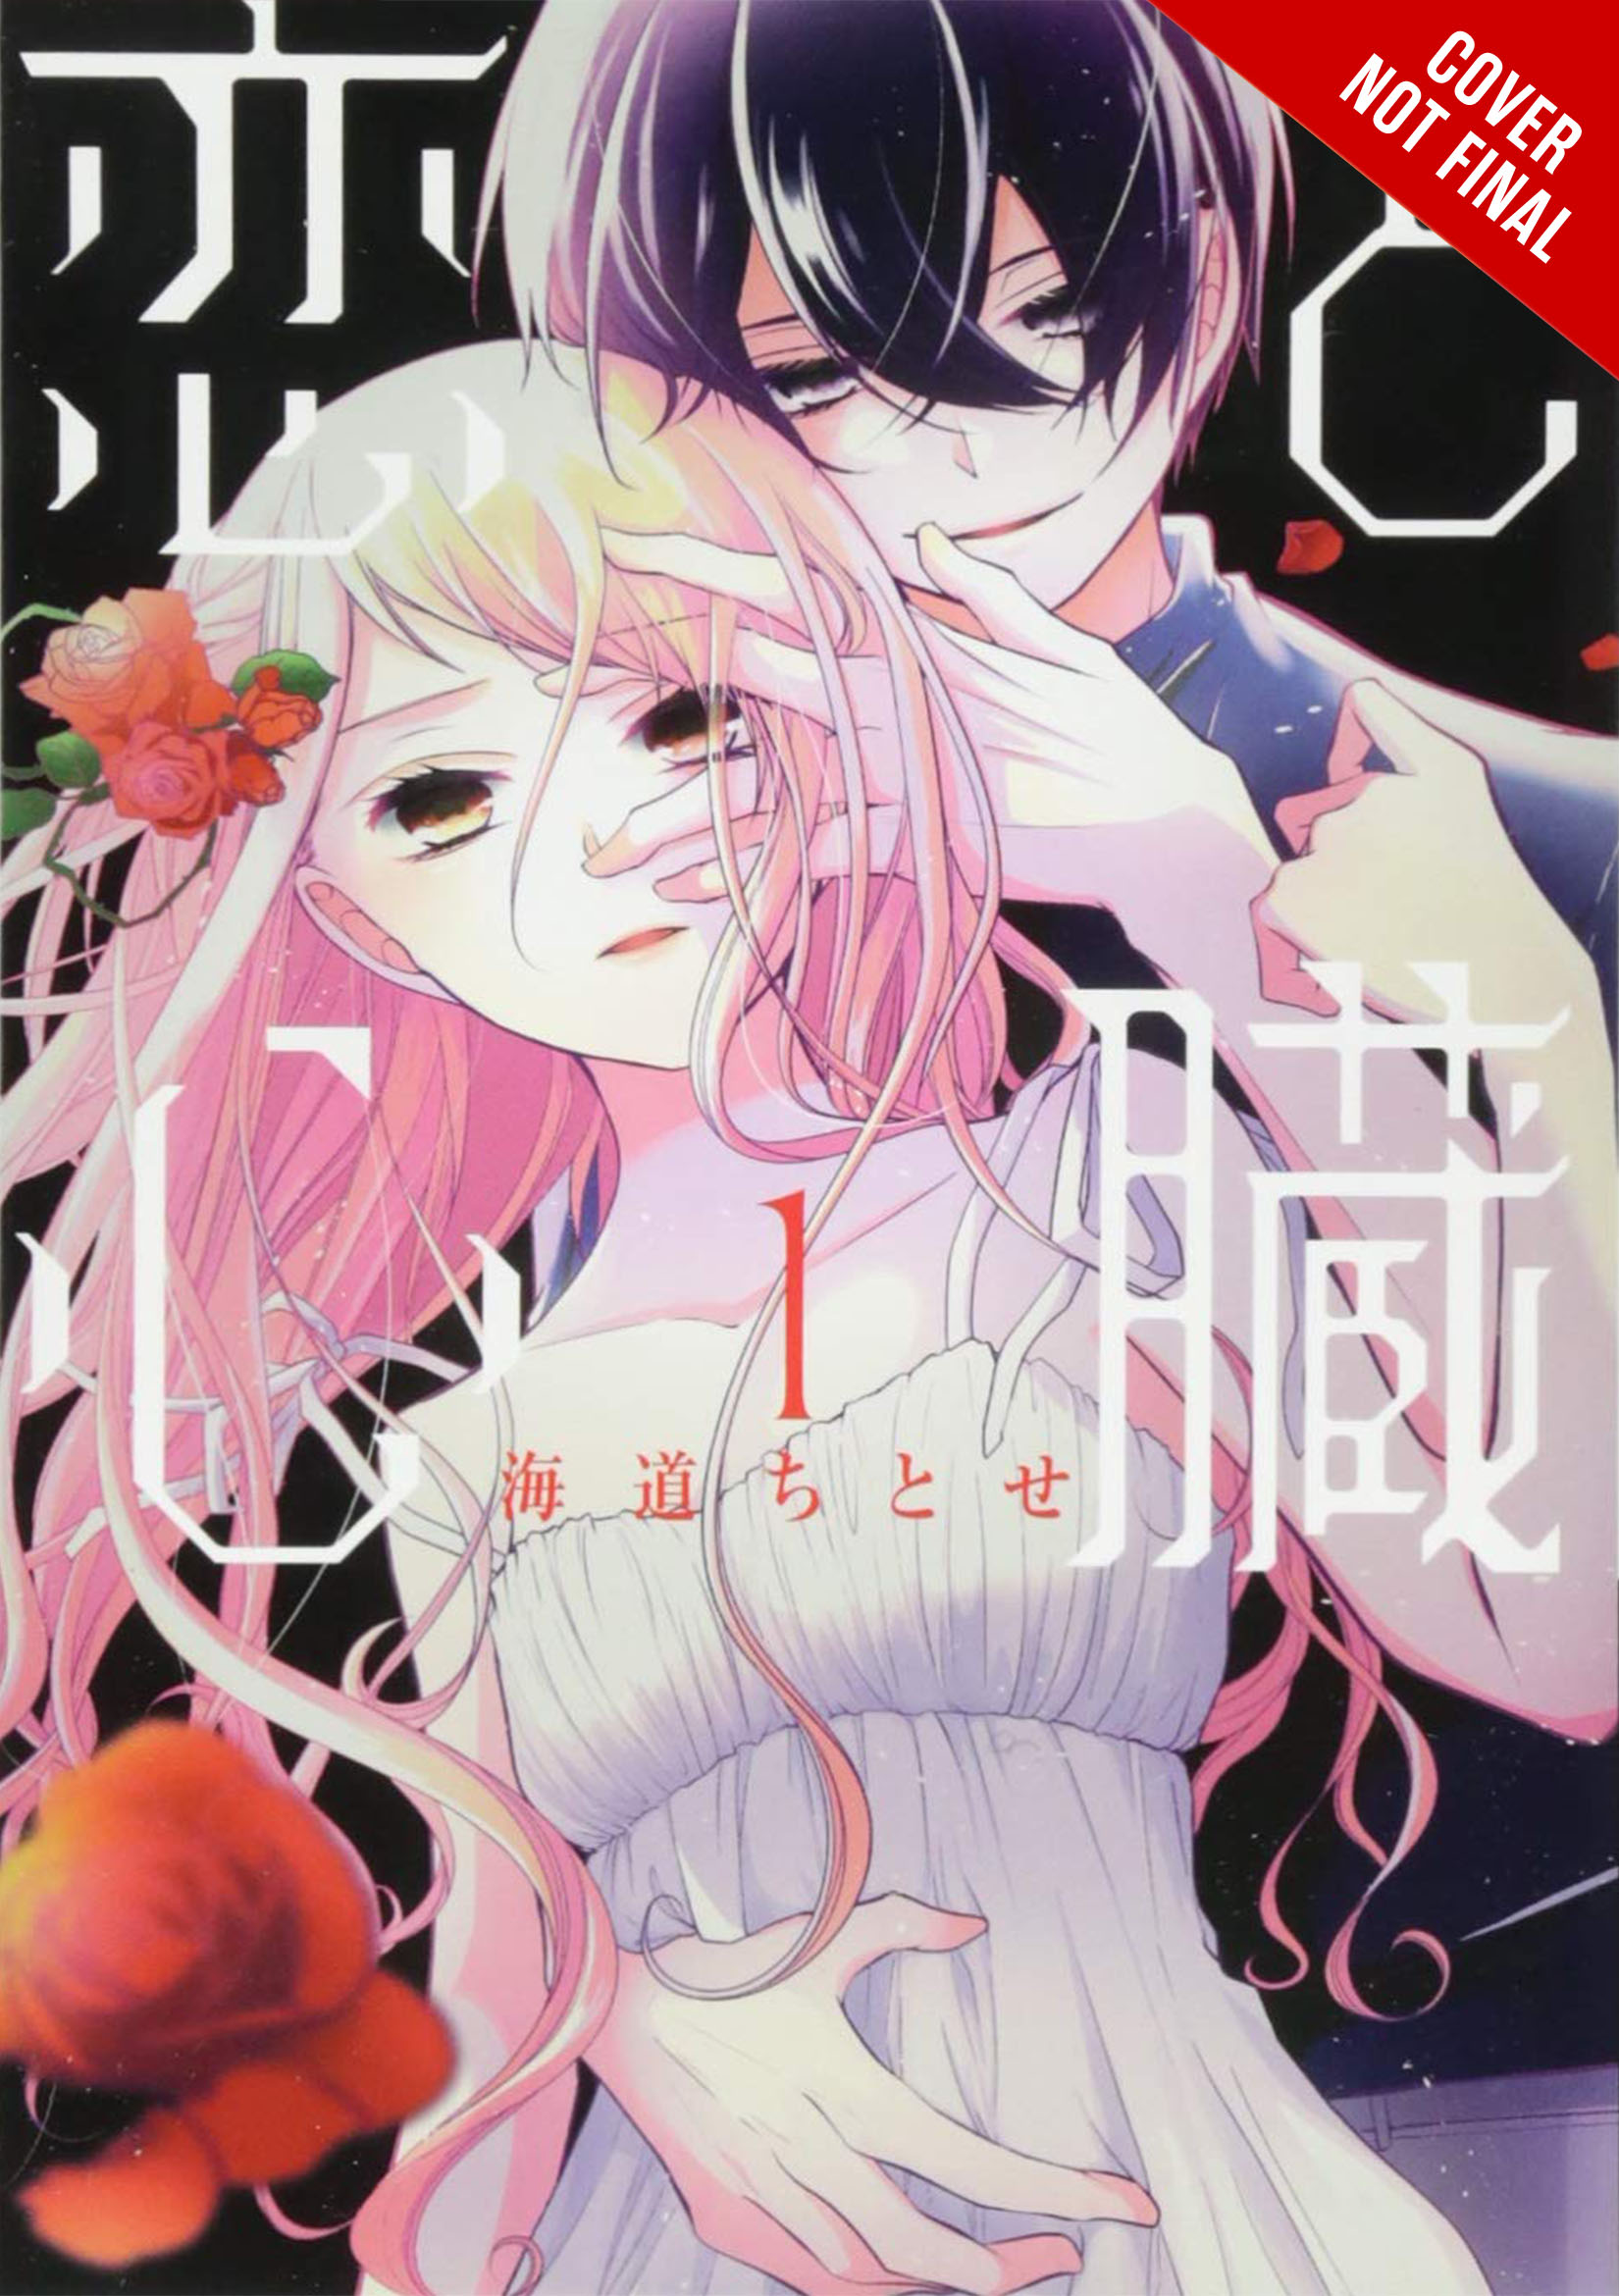 Mangamo Adds 2 New Manga, Reveals Print Debut Date for My Love